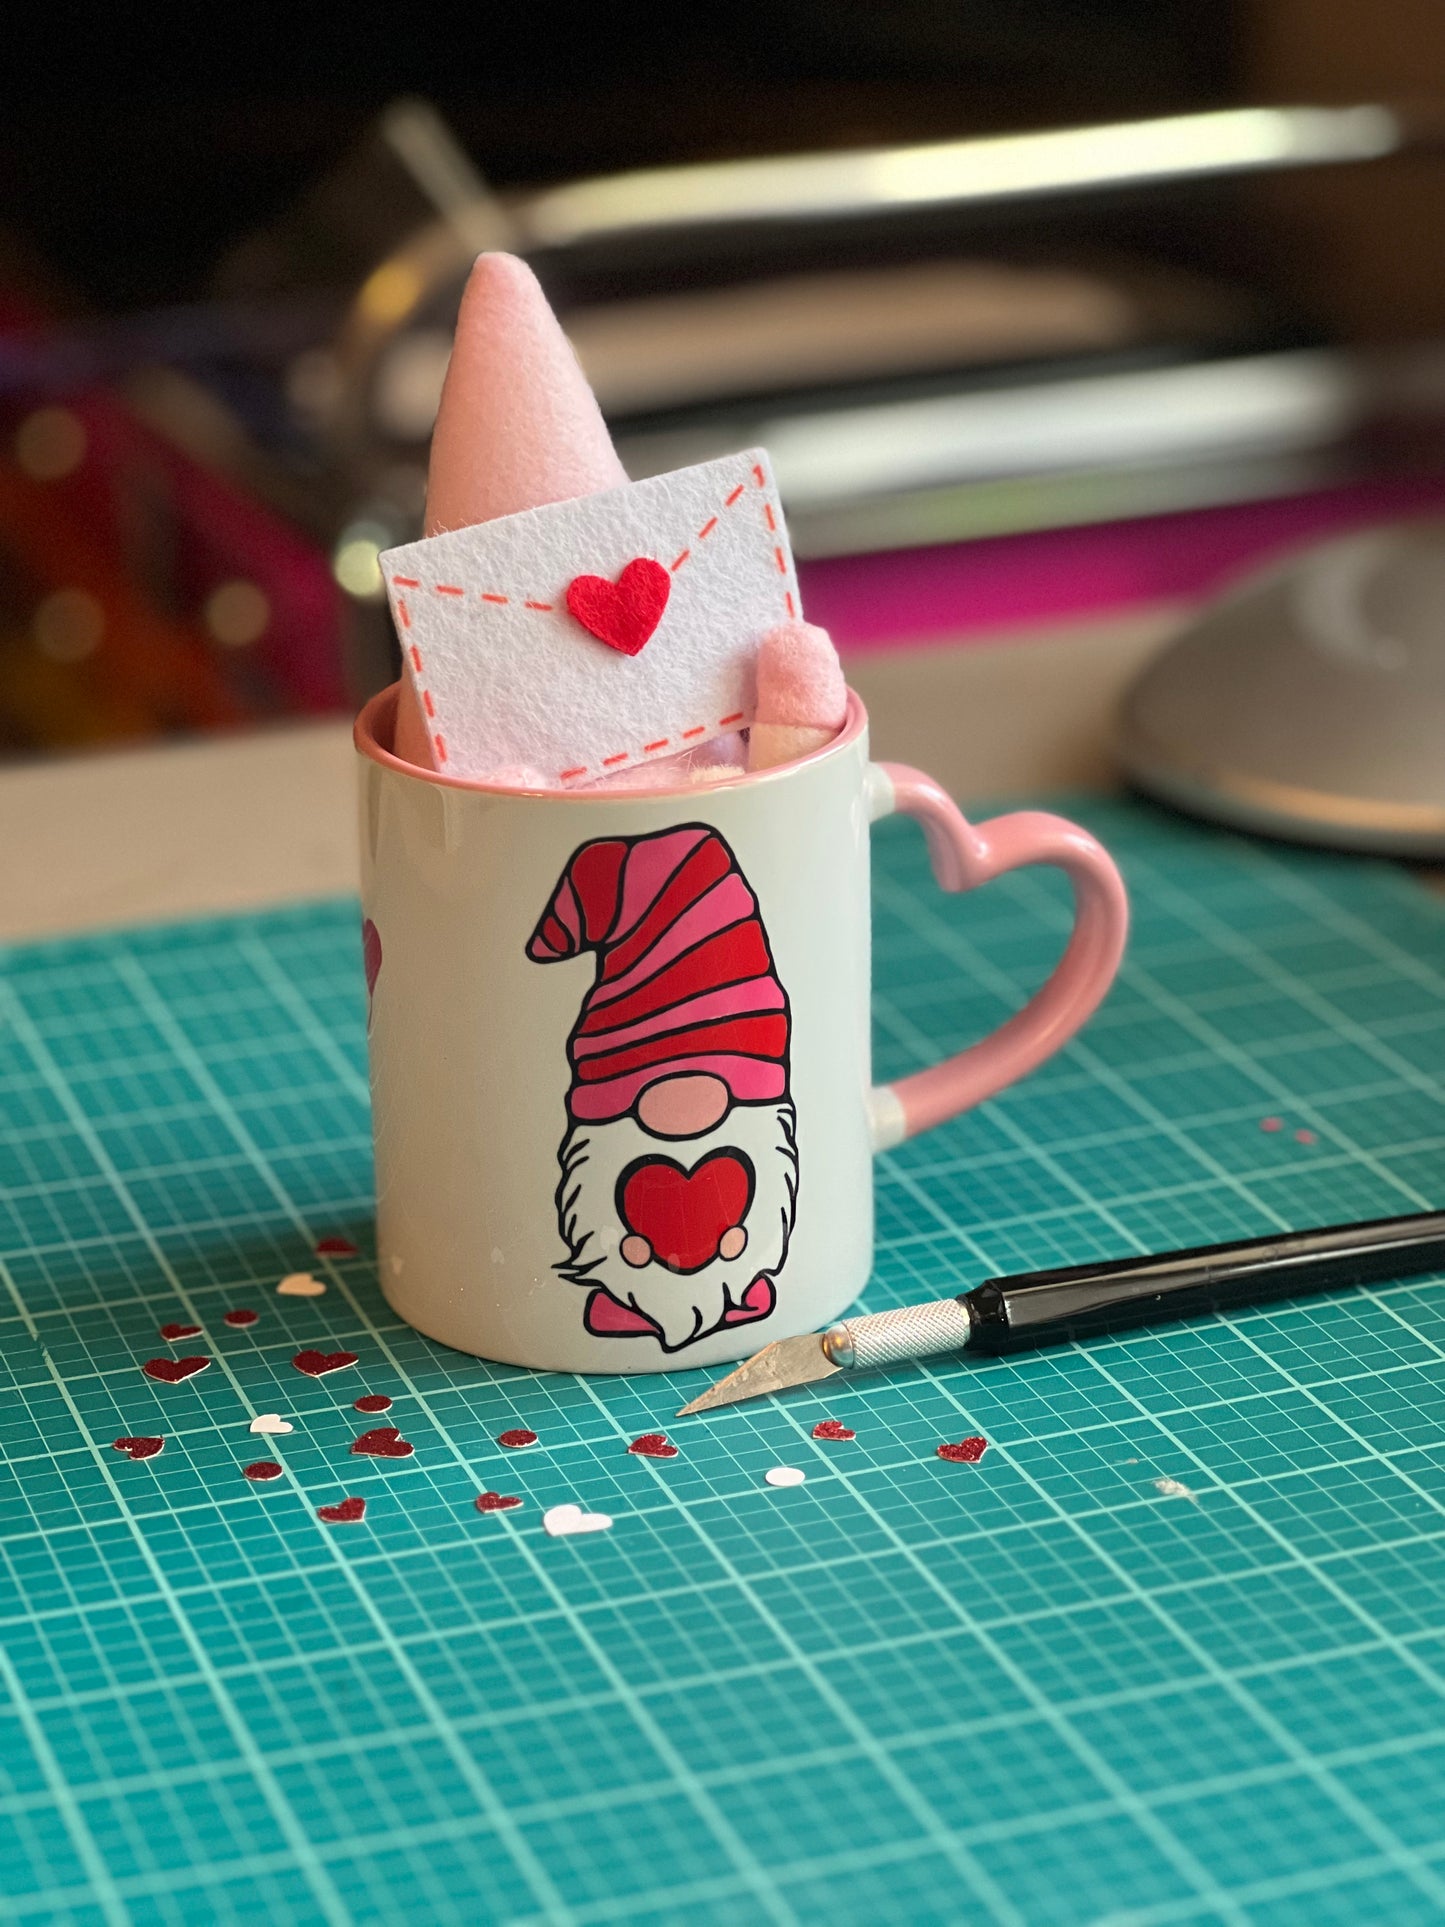 All You Need is Love Coffee Tea Mug and Gnome